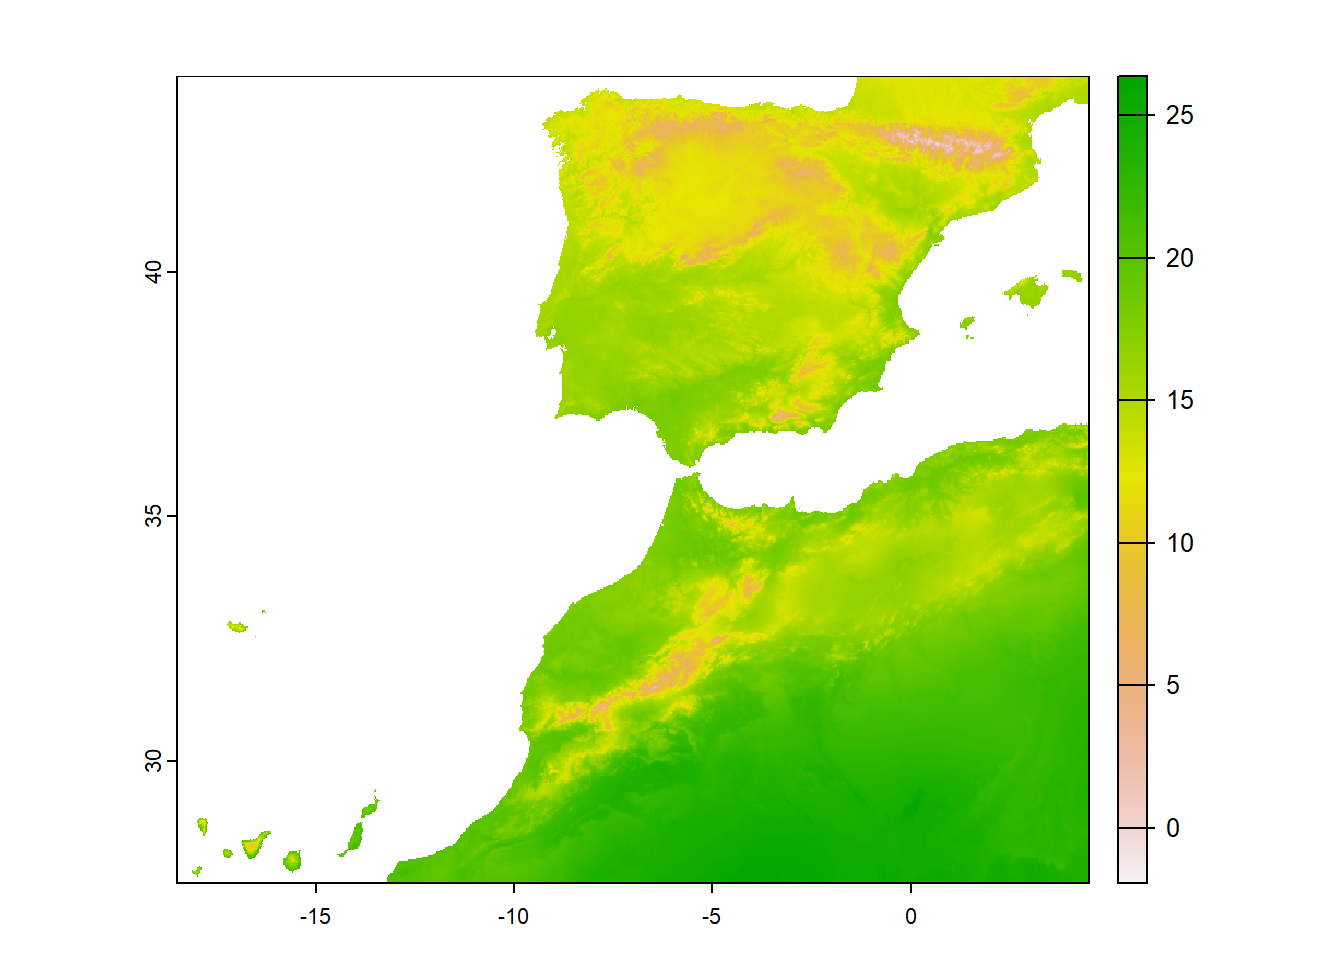 Raster representing the average annual temperature in Spain.